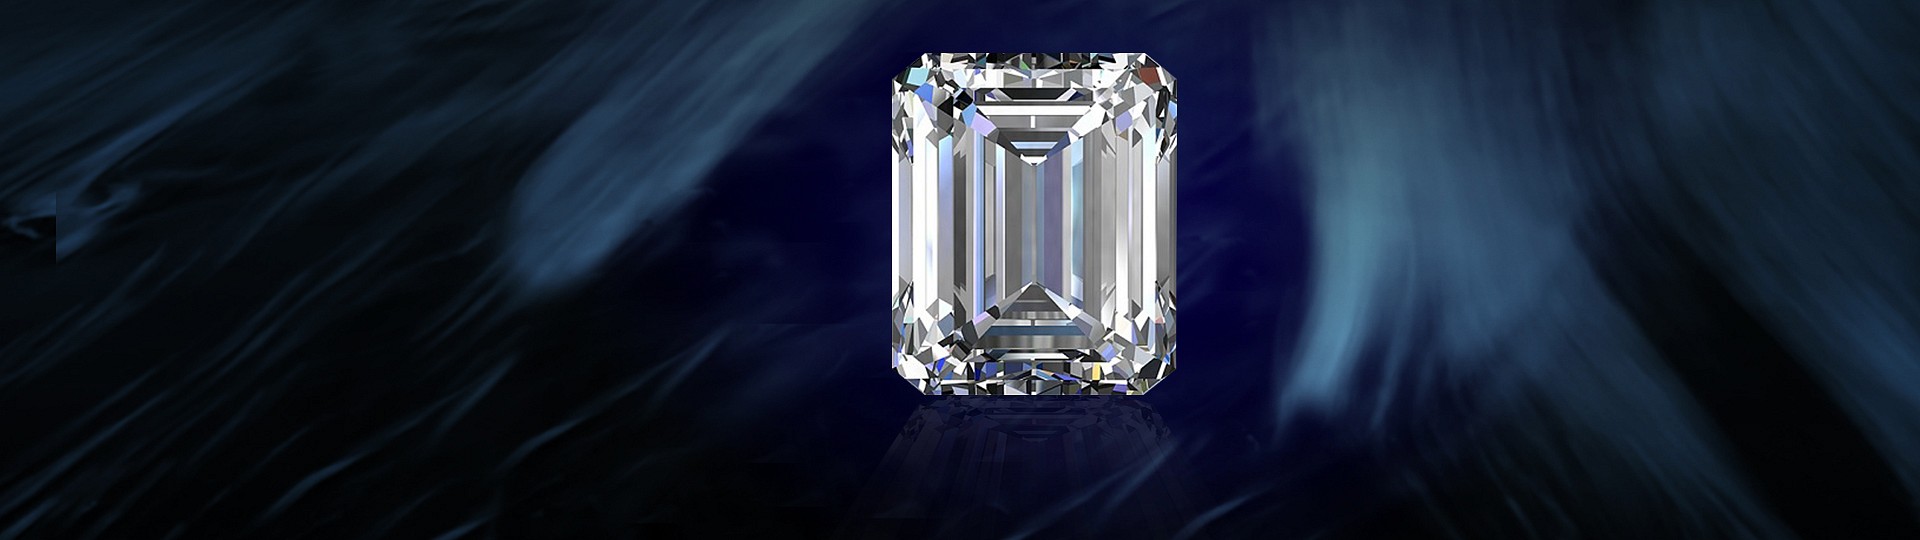 Type IIa Diamonds - Brokers Investment Auction by Bid Global International Auctioneers LLC